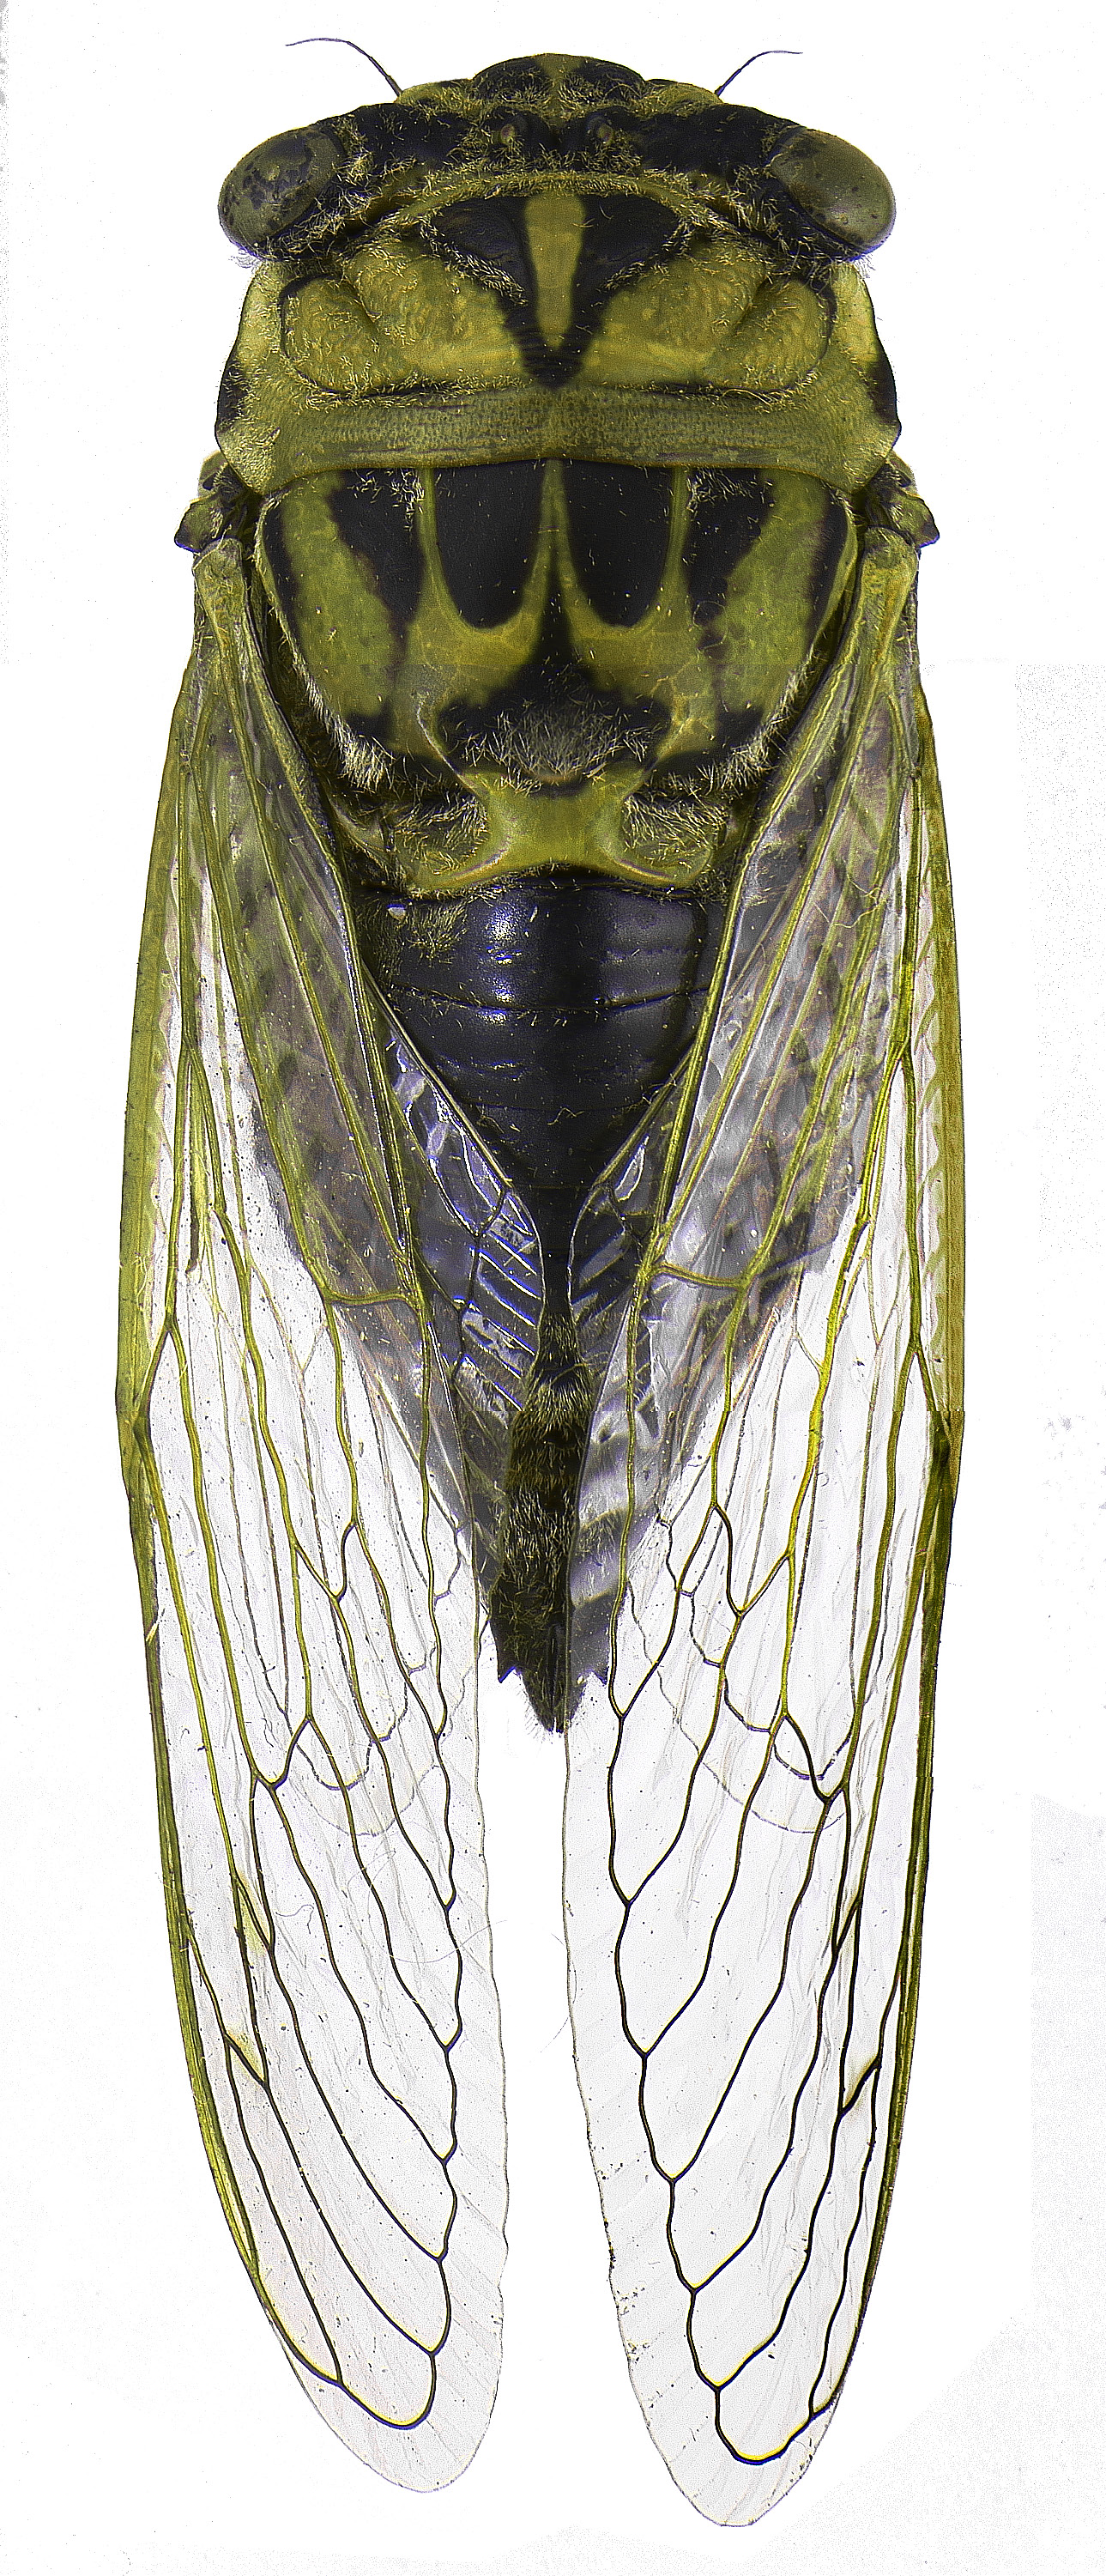 #18 Annual cicada